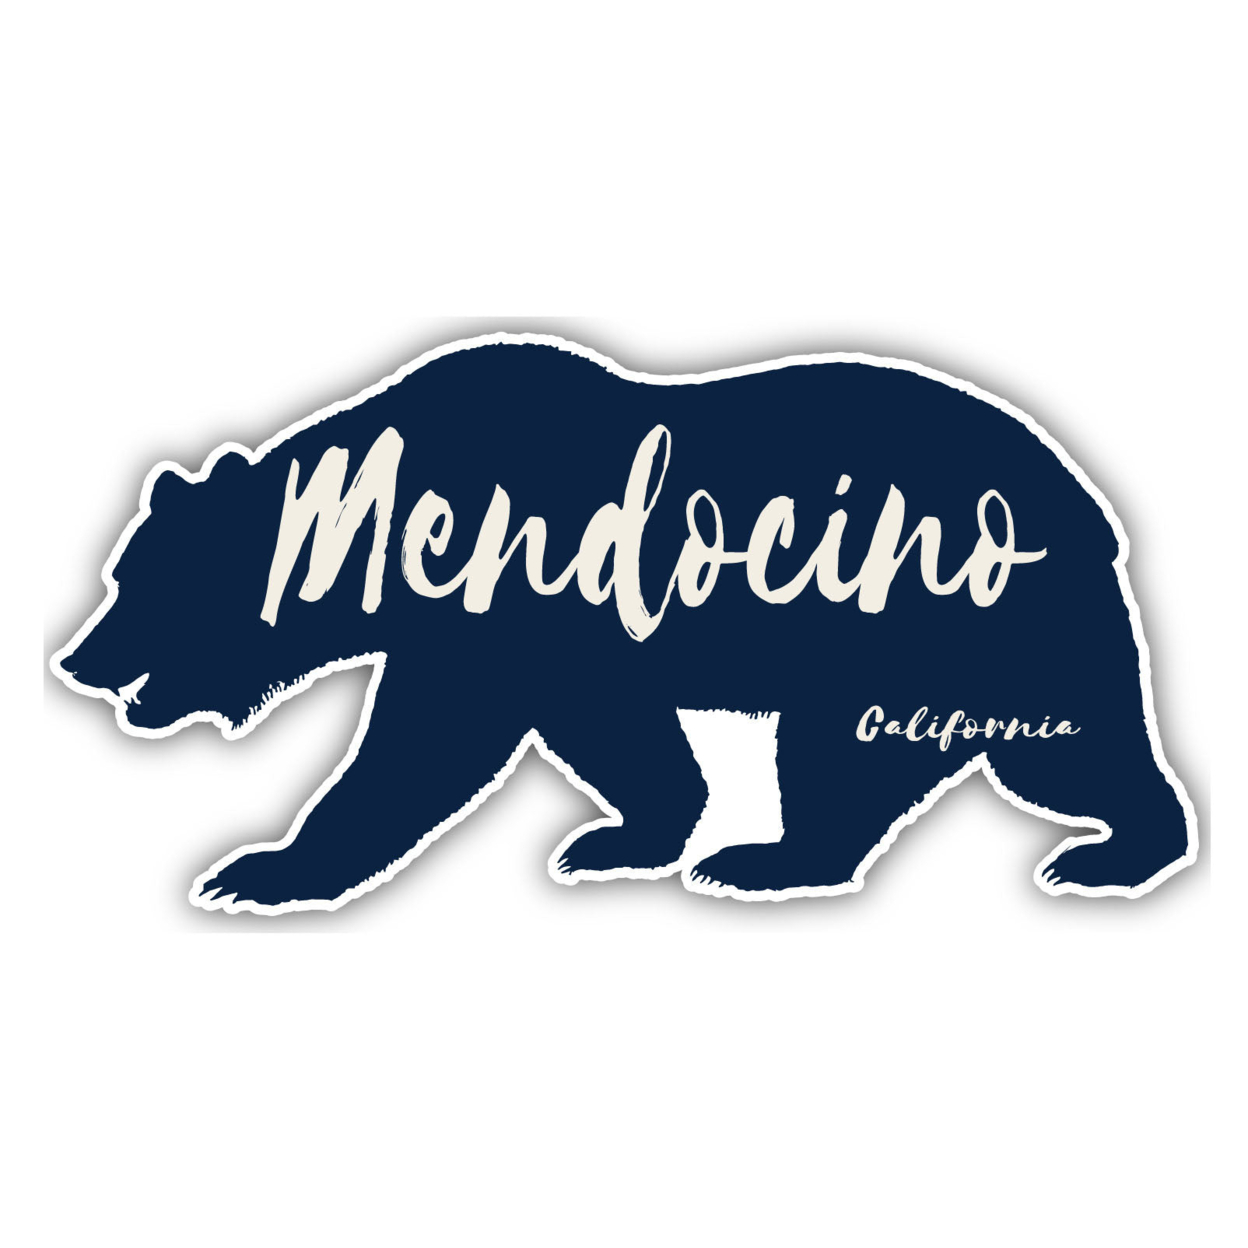 Mendocino California Souvenir Decorative Stickers (Choose Theme And Size) - 2-Inch, Tent